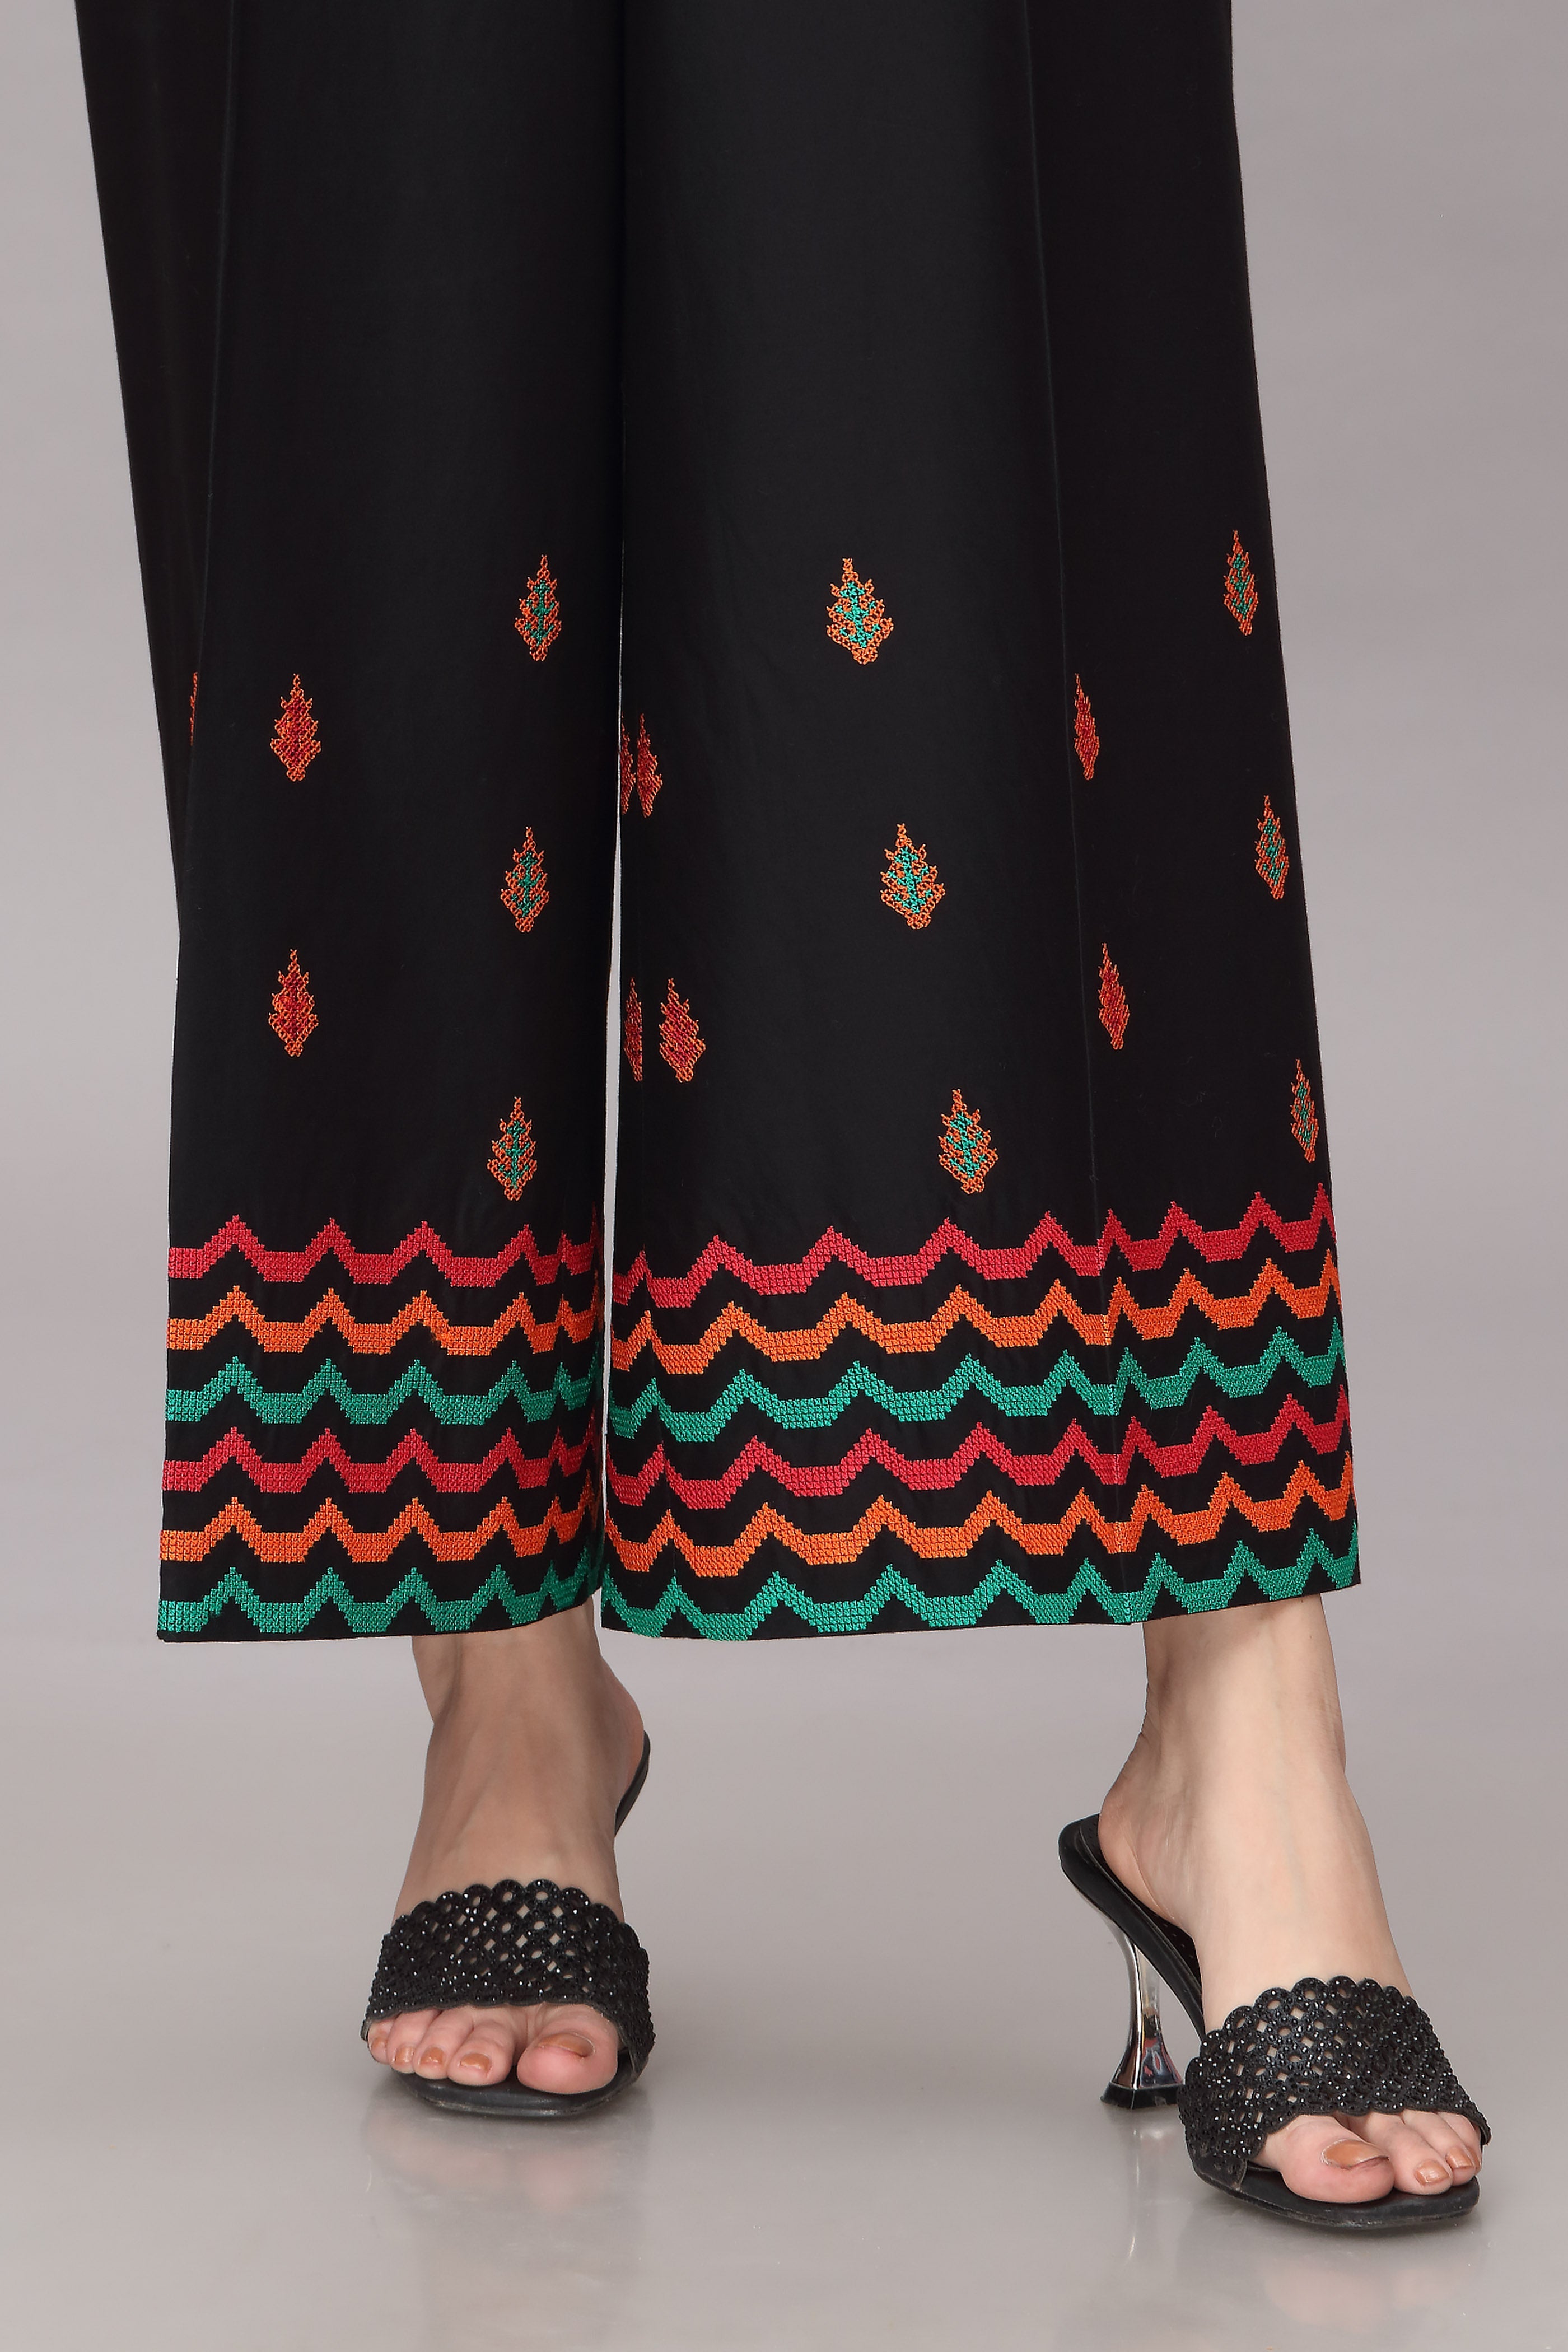 Fashion Chatni - Latest style Trouser design for girls.. Do u like it.. |  Facebook